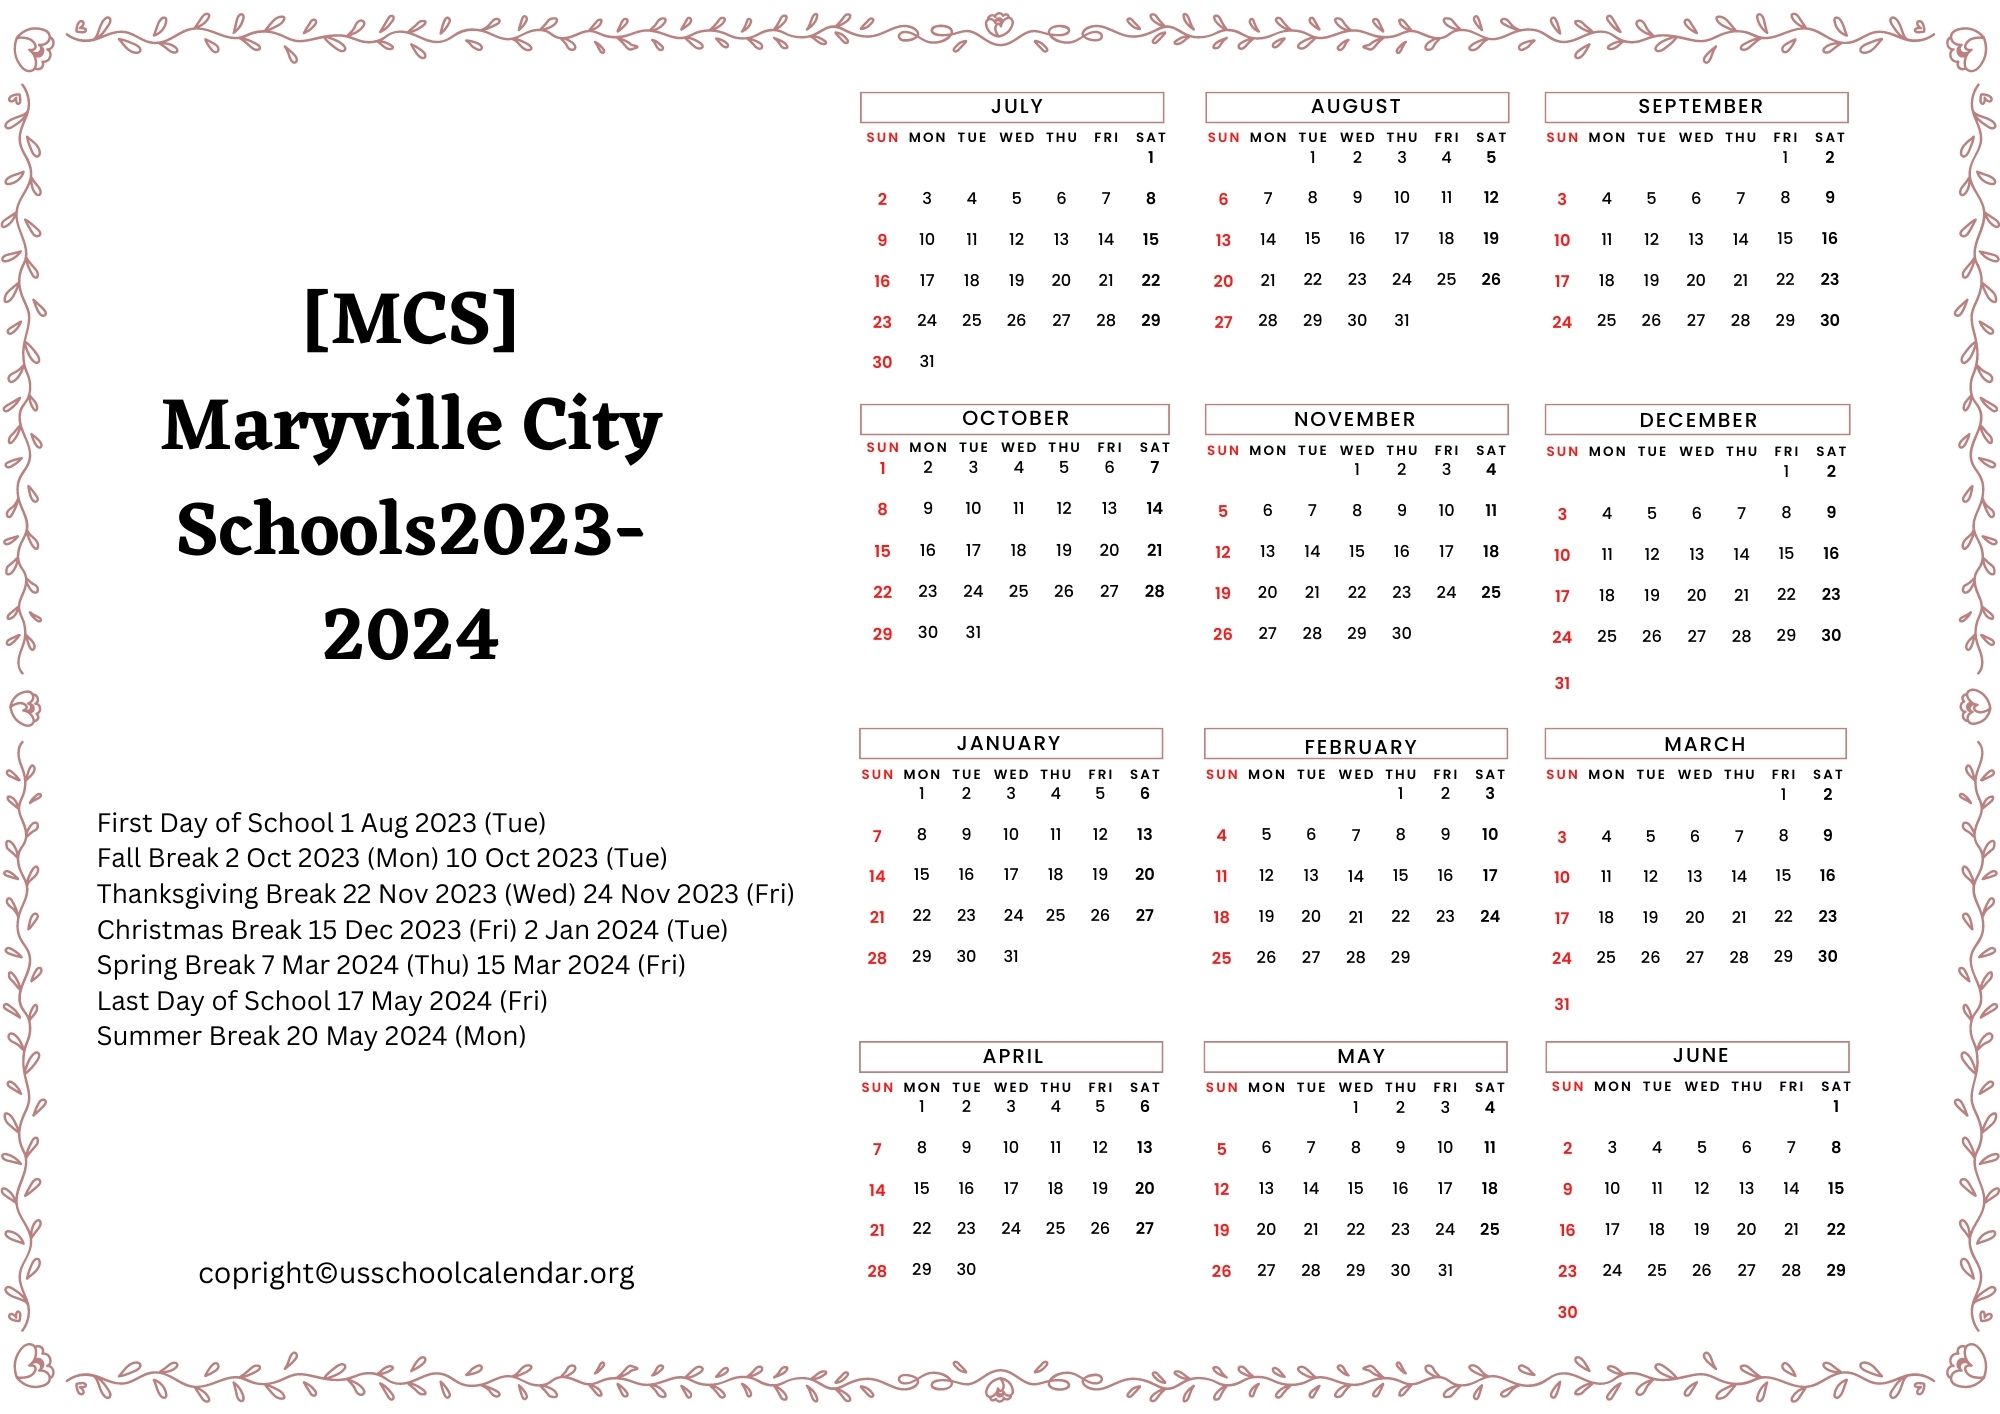 mcs-maryville-city-schools-calendar-with-holidays-2023-2024